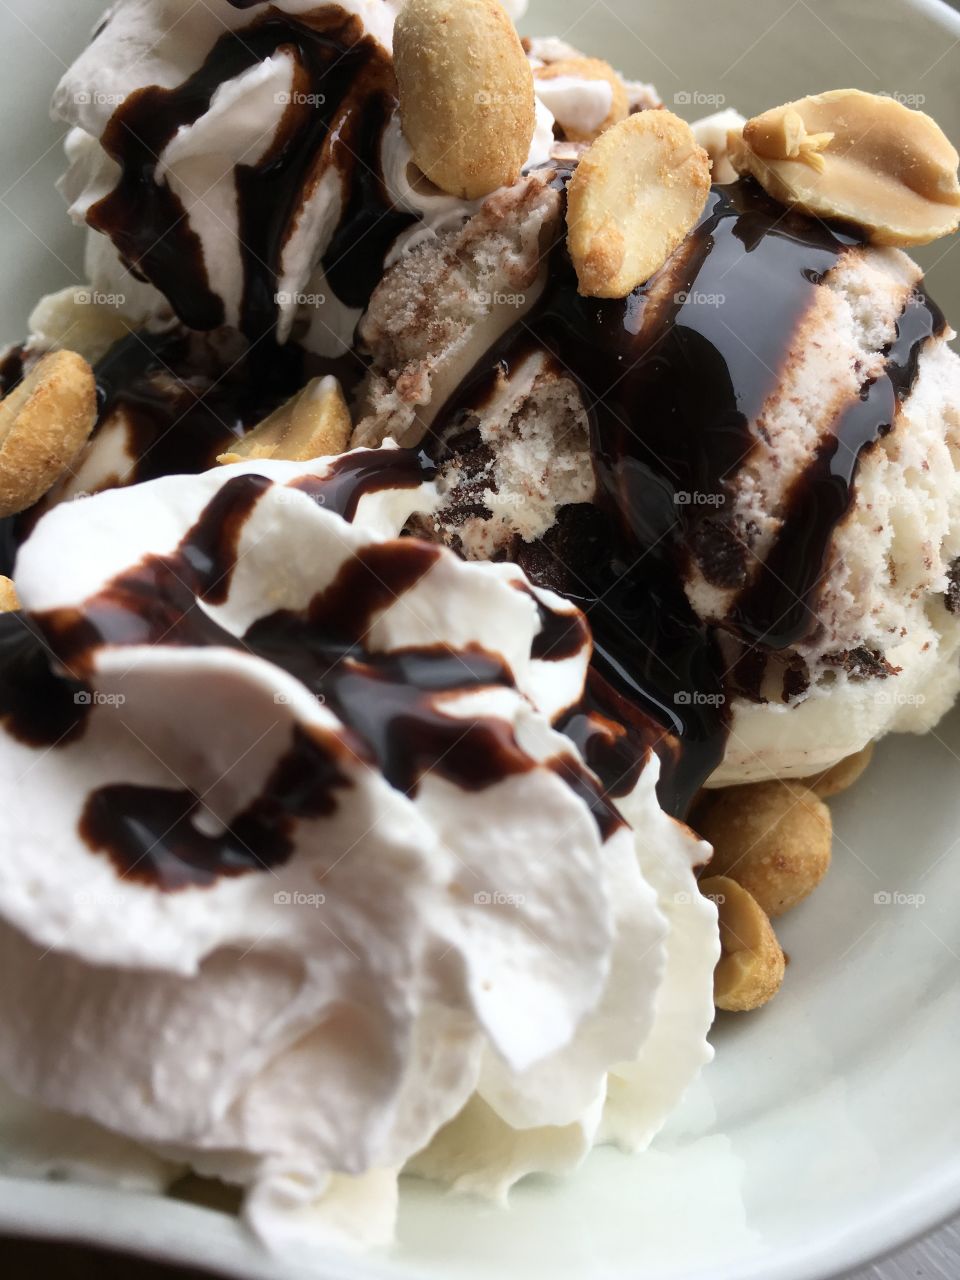 Chocolate ice cream sundae with whip cream and peanuts. 